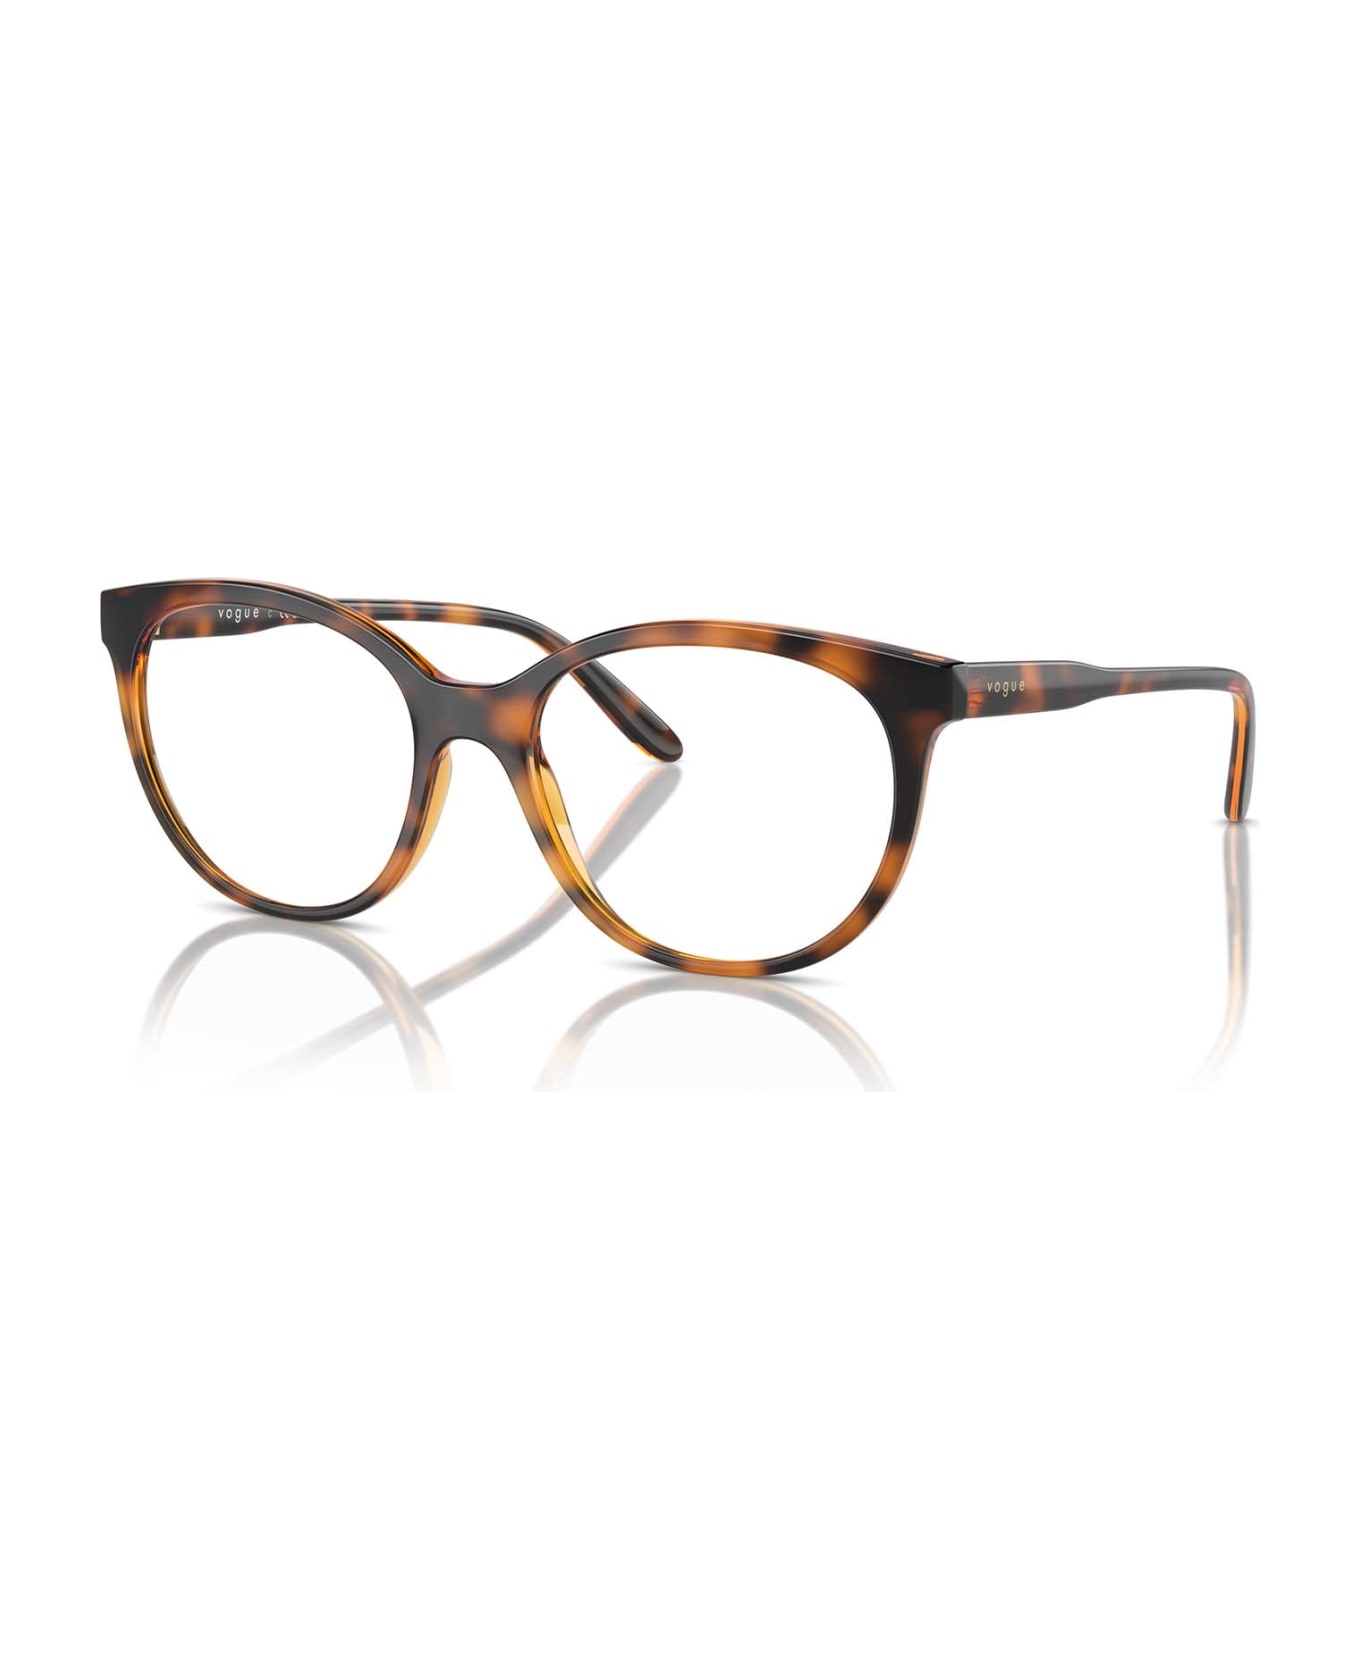 Vogue Eyewear Vo5552 Dark Havana Glasses - Dark Havana